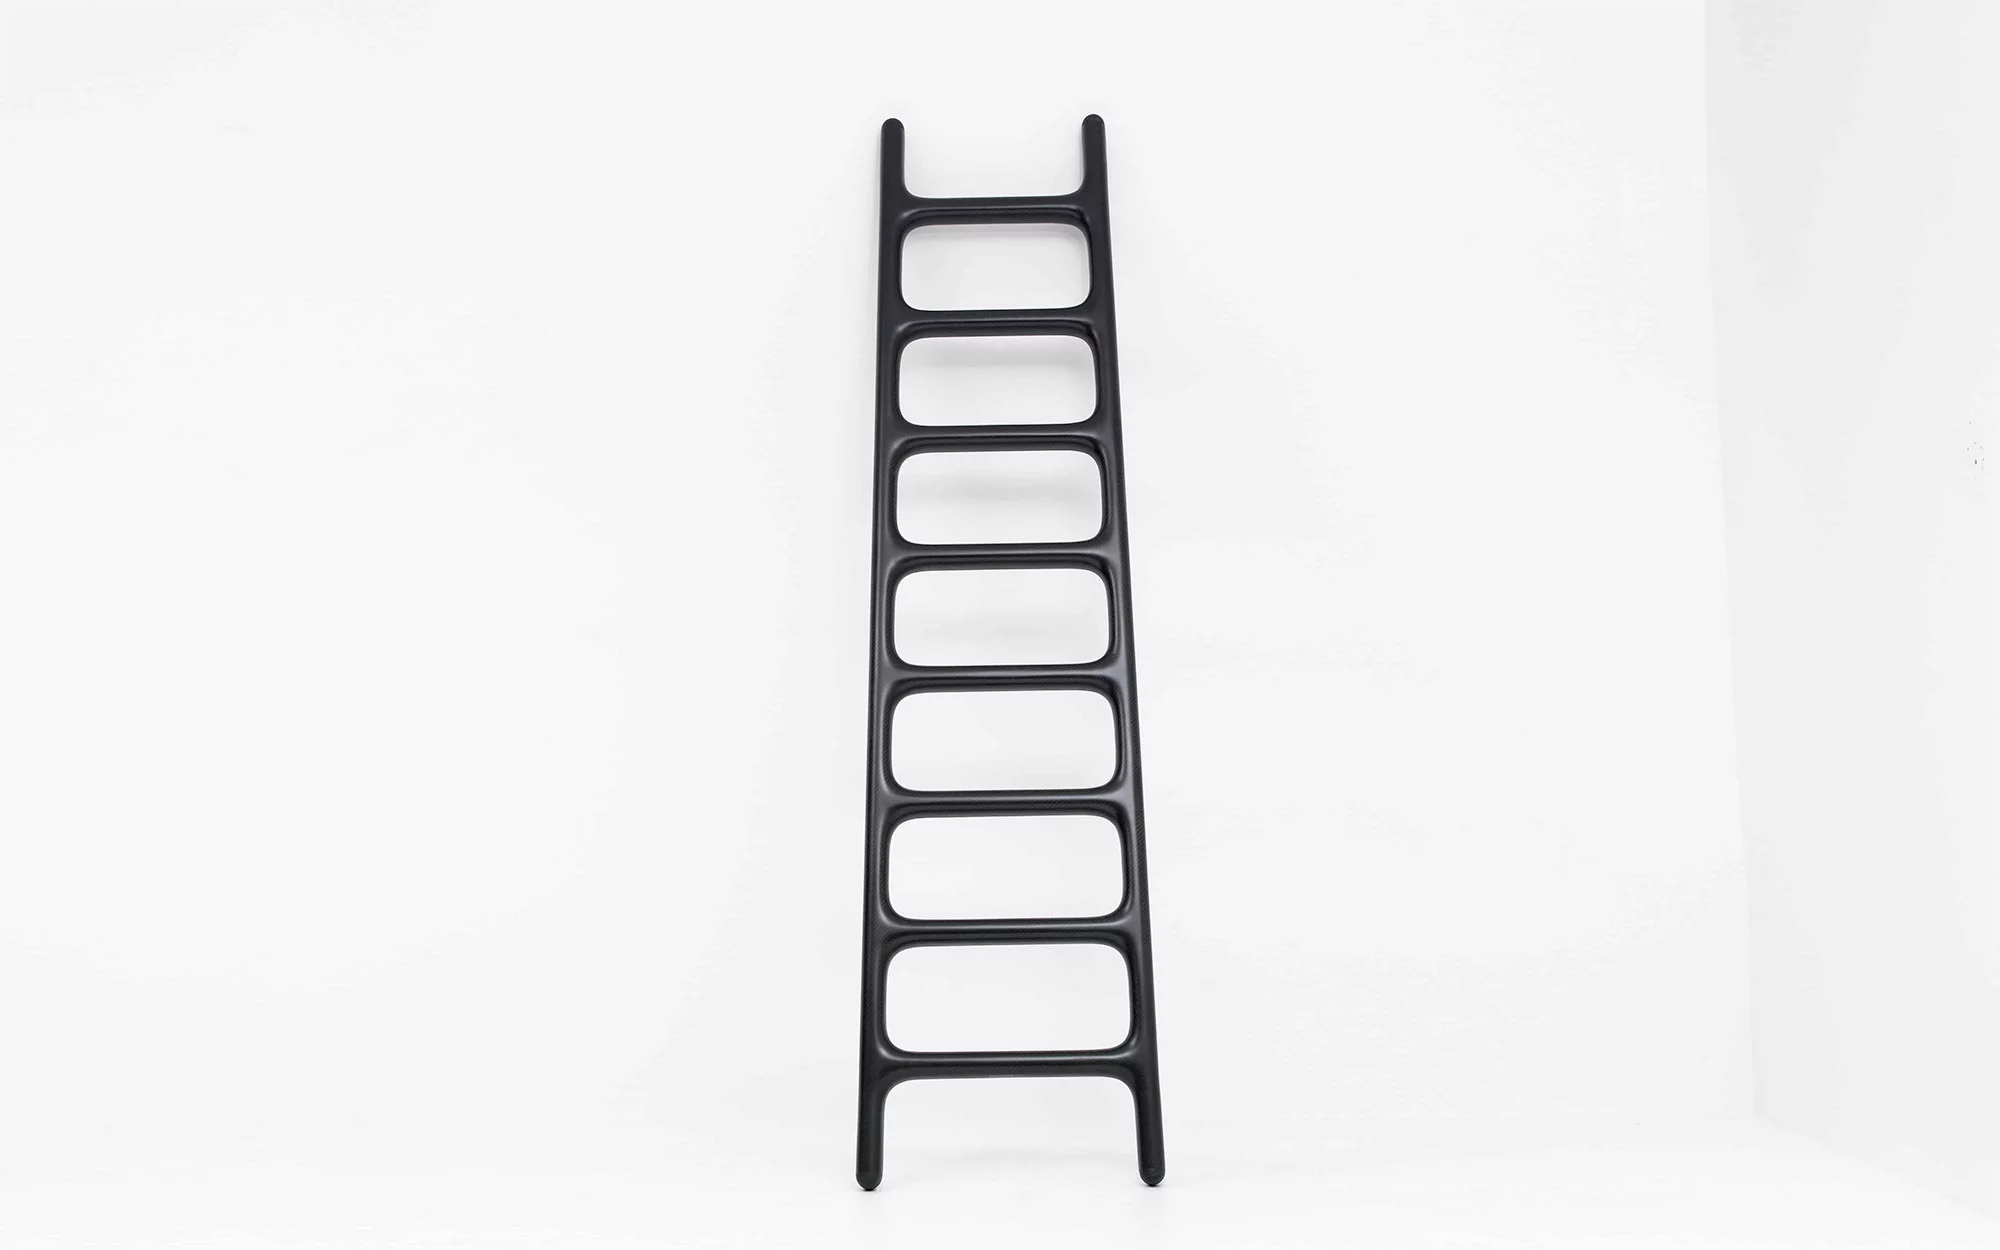 Carbon Ladder - Marc Newson - One piece a day.